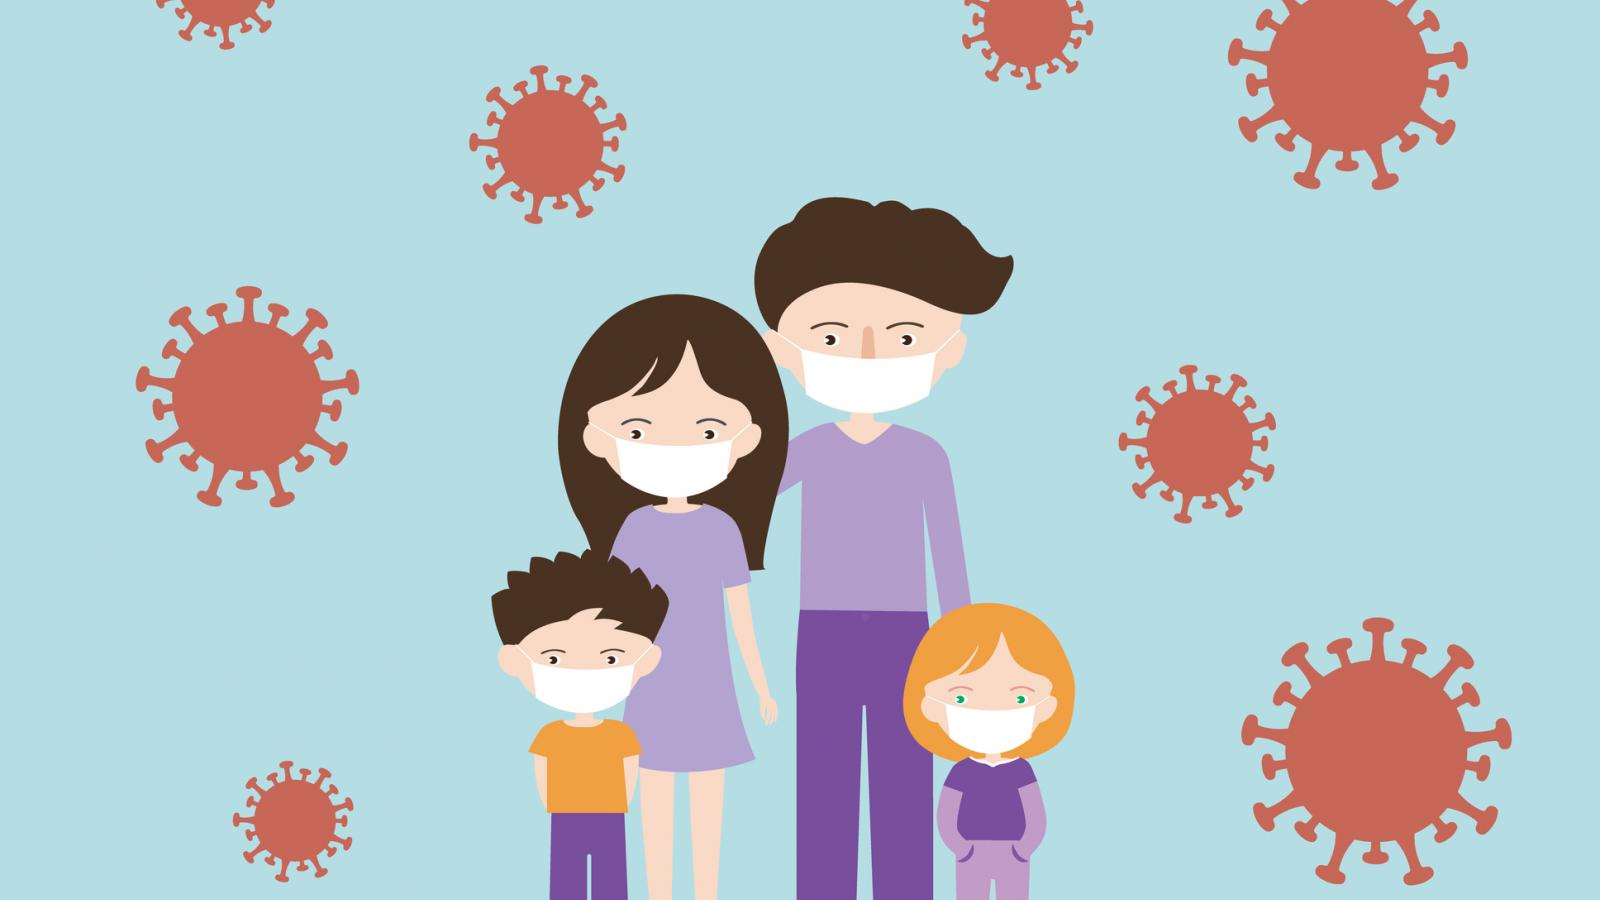 illustration of family during coronavirus